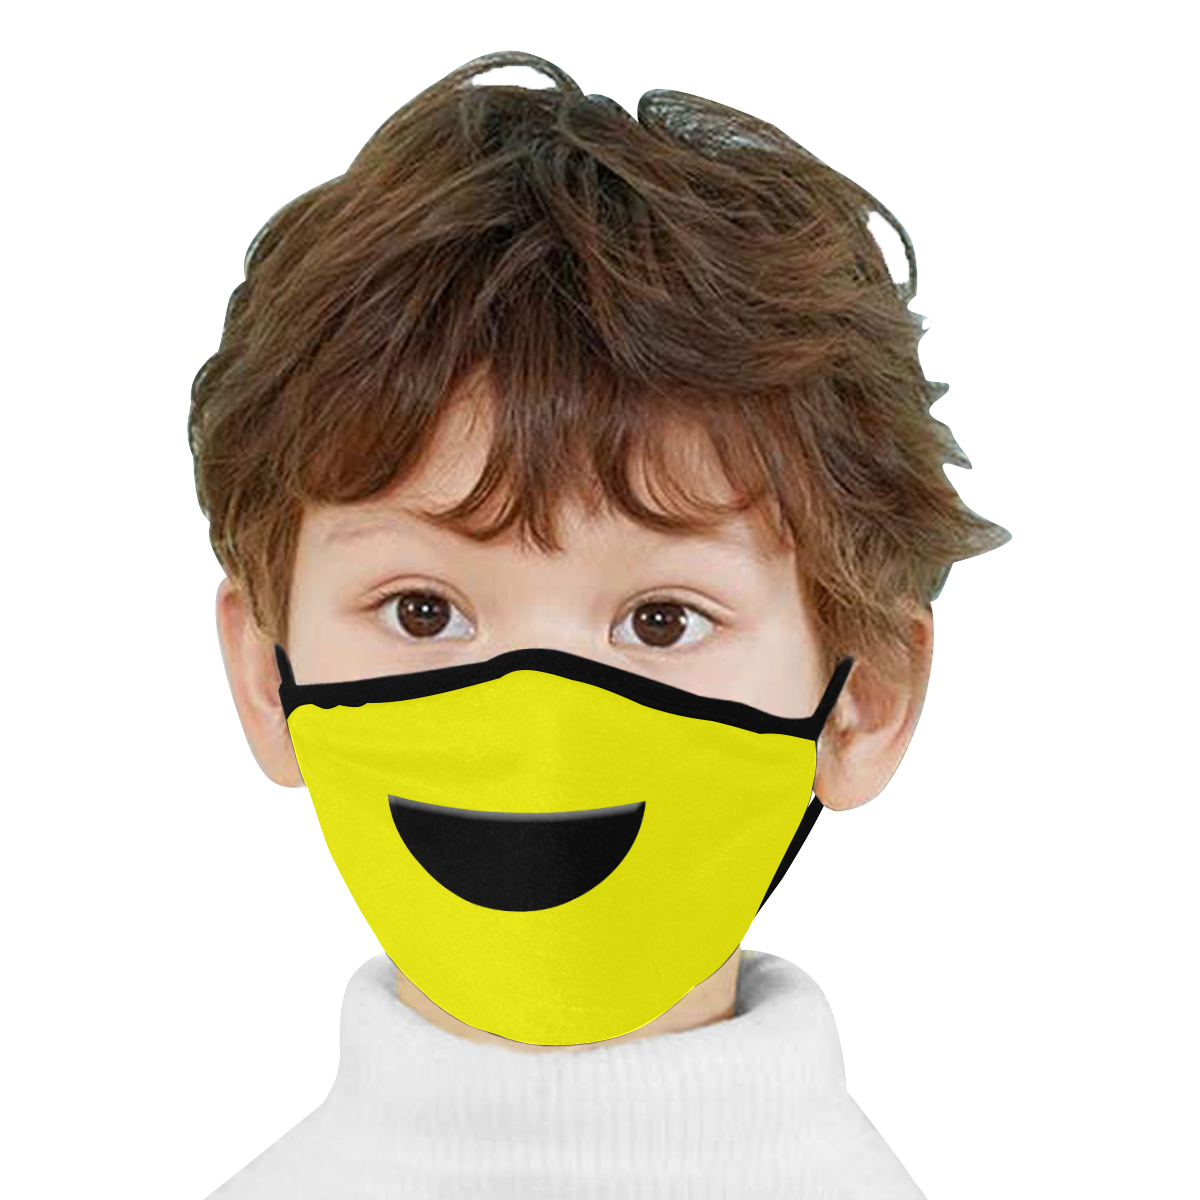 Emoticon Smile Mouth Mask